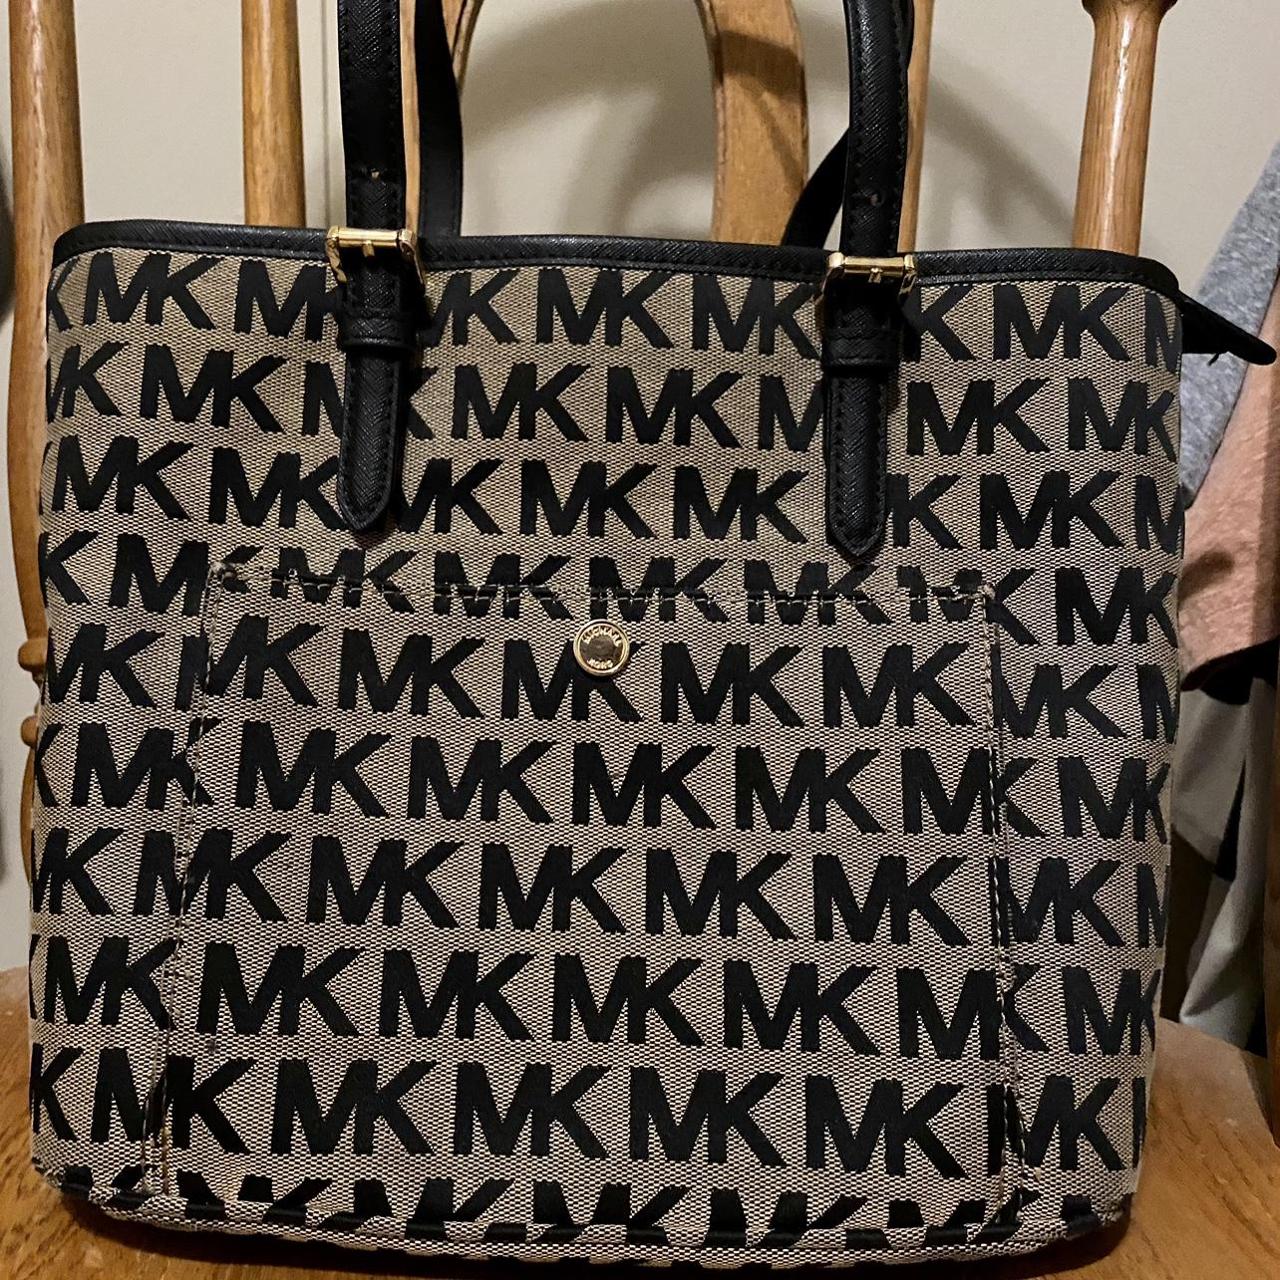 MICHAEL Michael Kors Womens Jet Set Leather Signature Tote Handbag